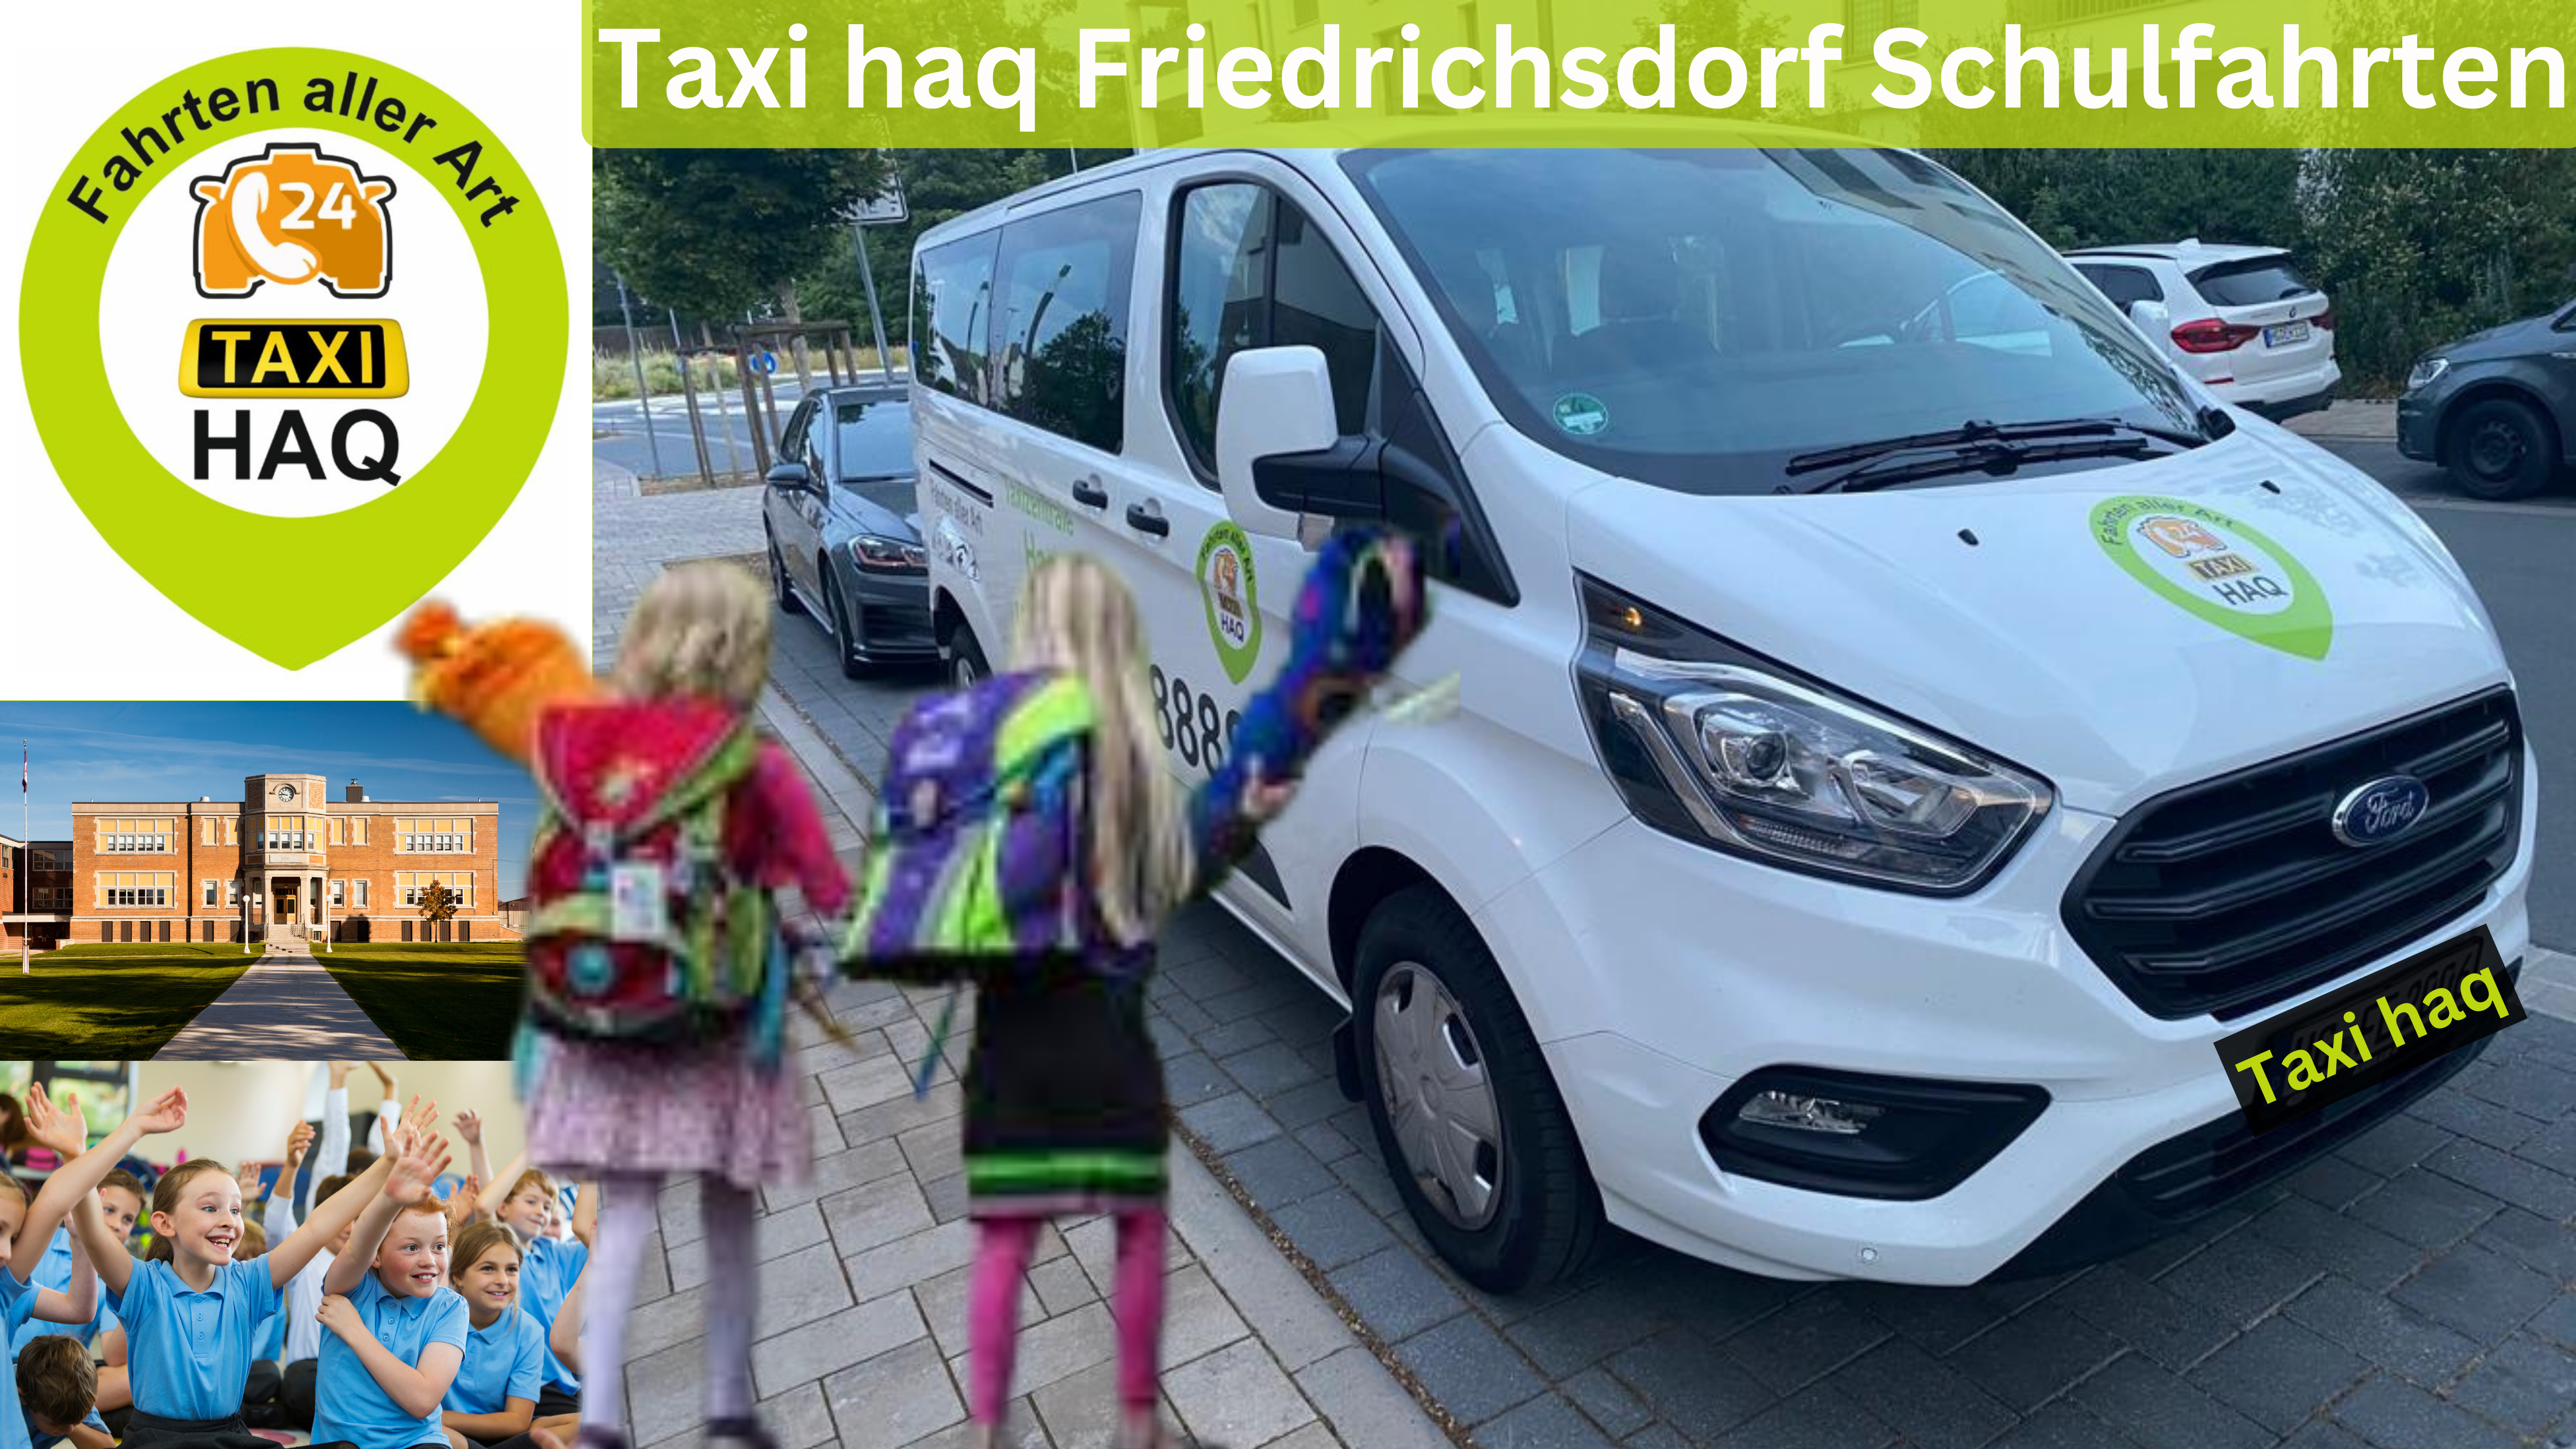 Taxi-haq-Friedrichsdorf-Schulfahrten